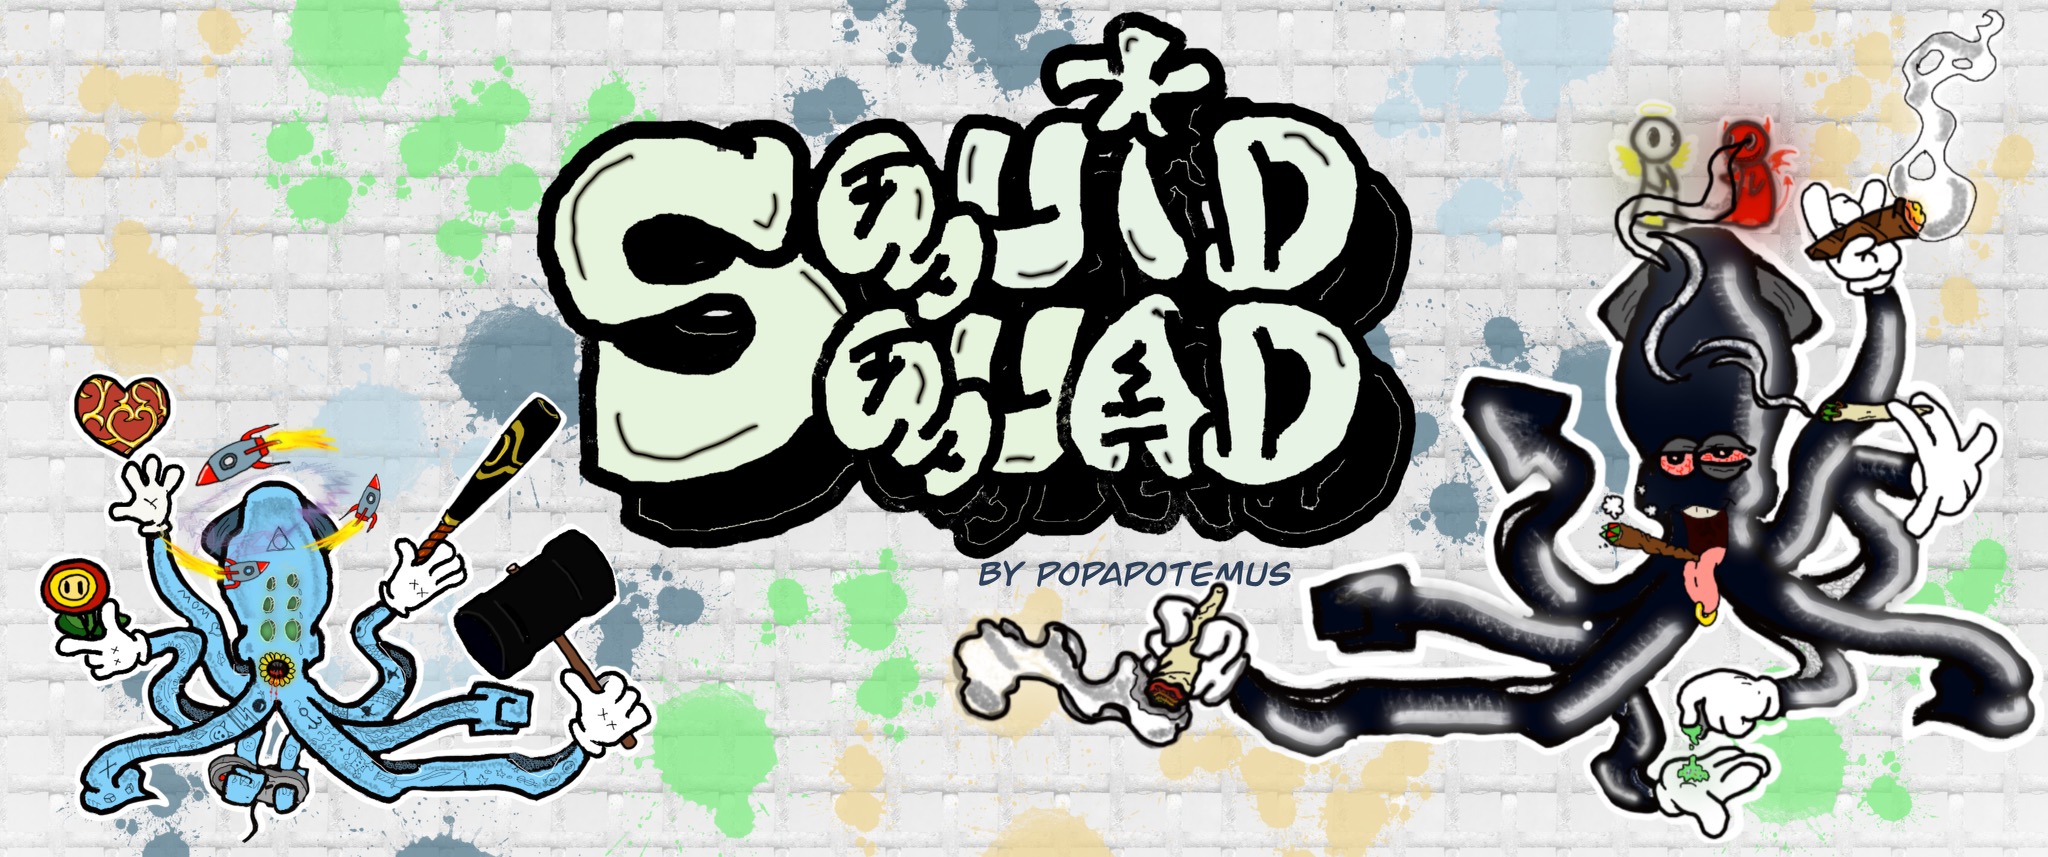 Squid_Squad_Deployer バナー